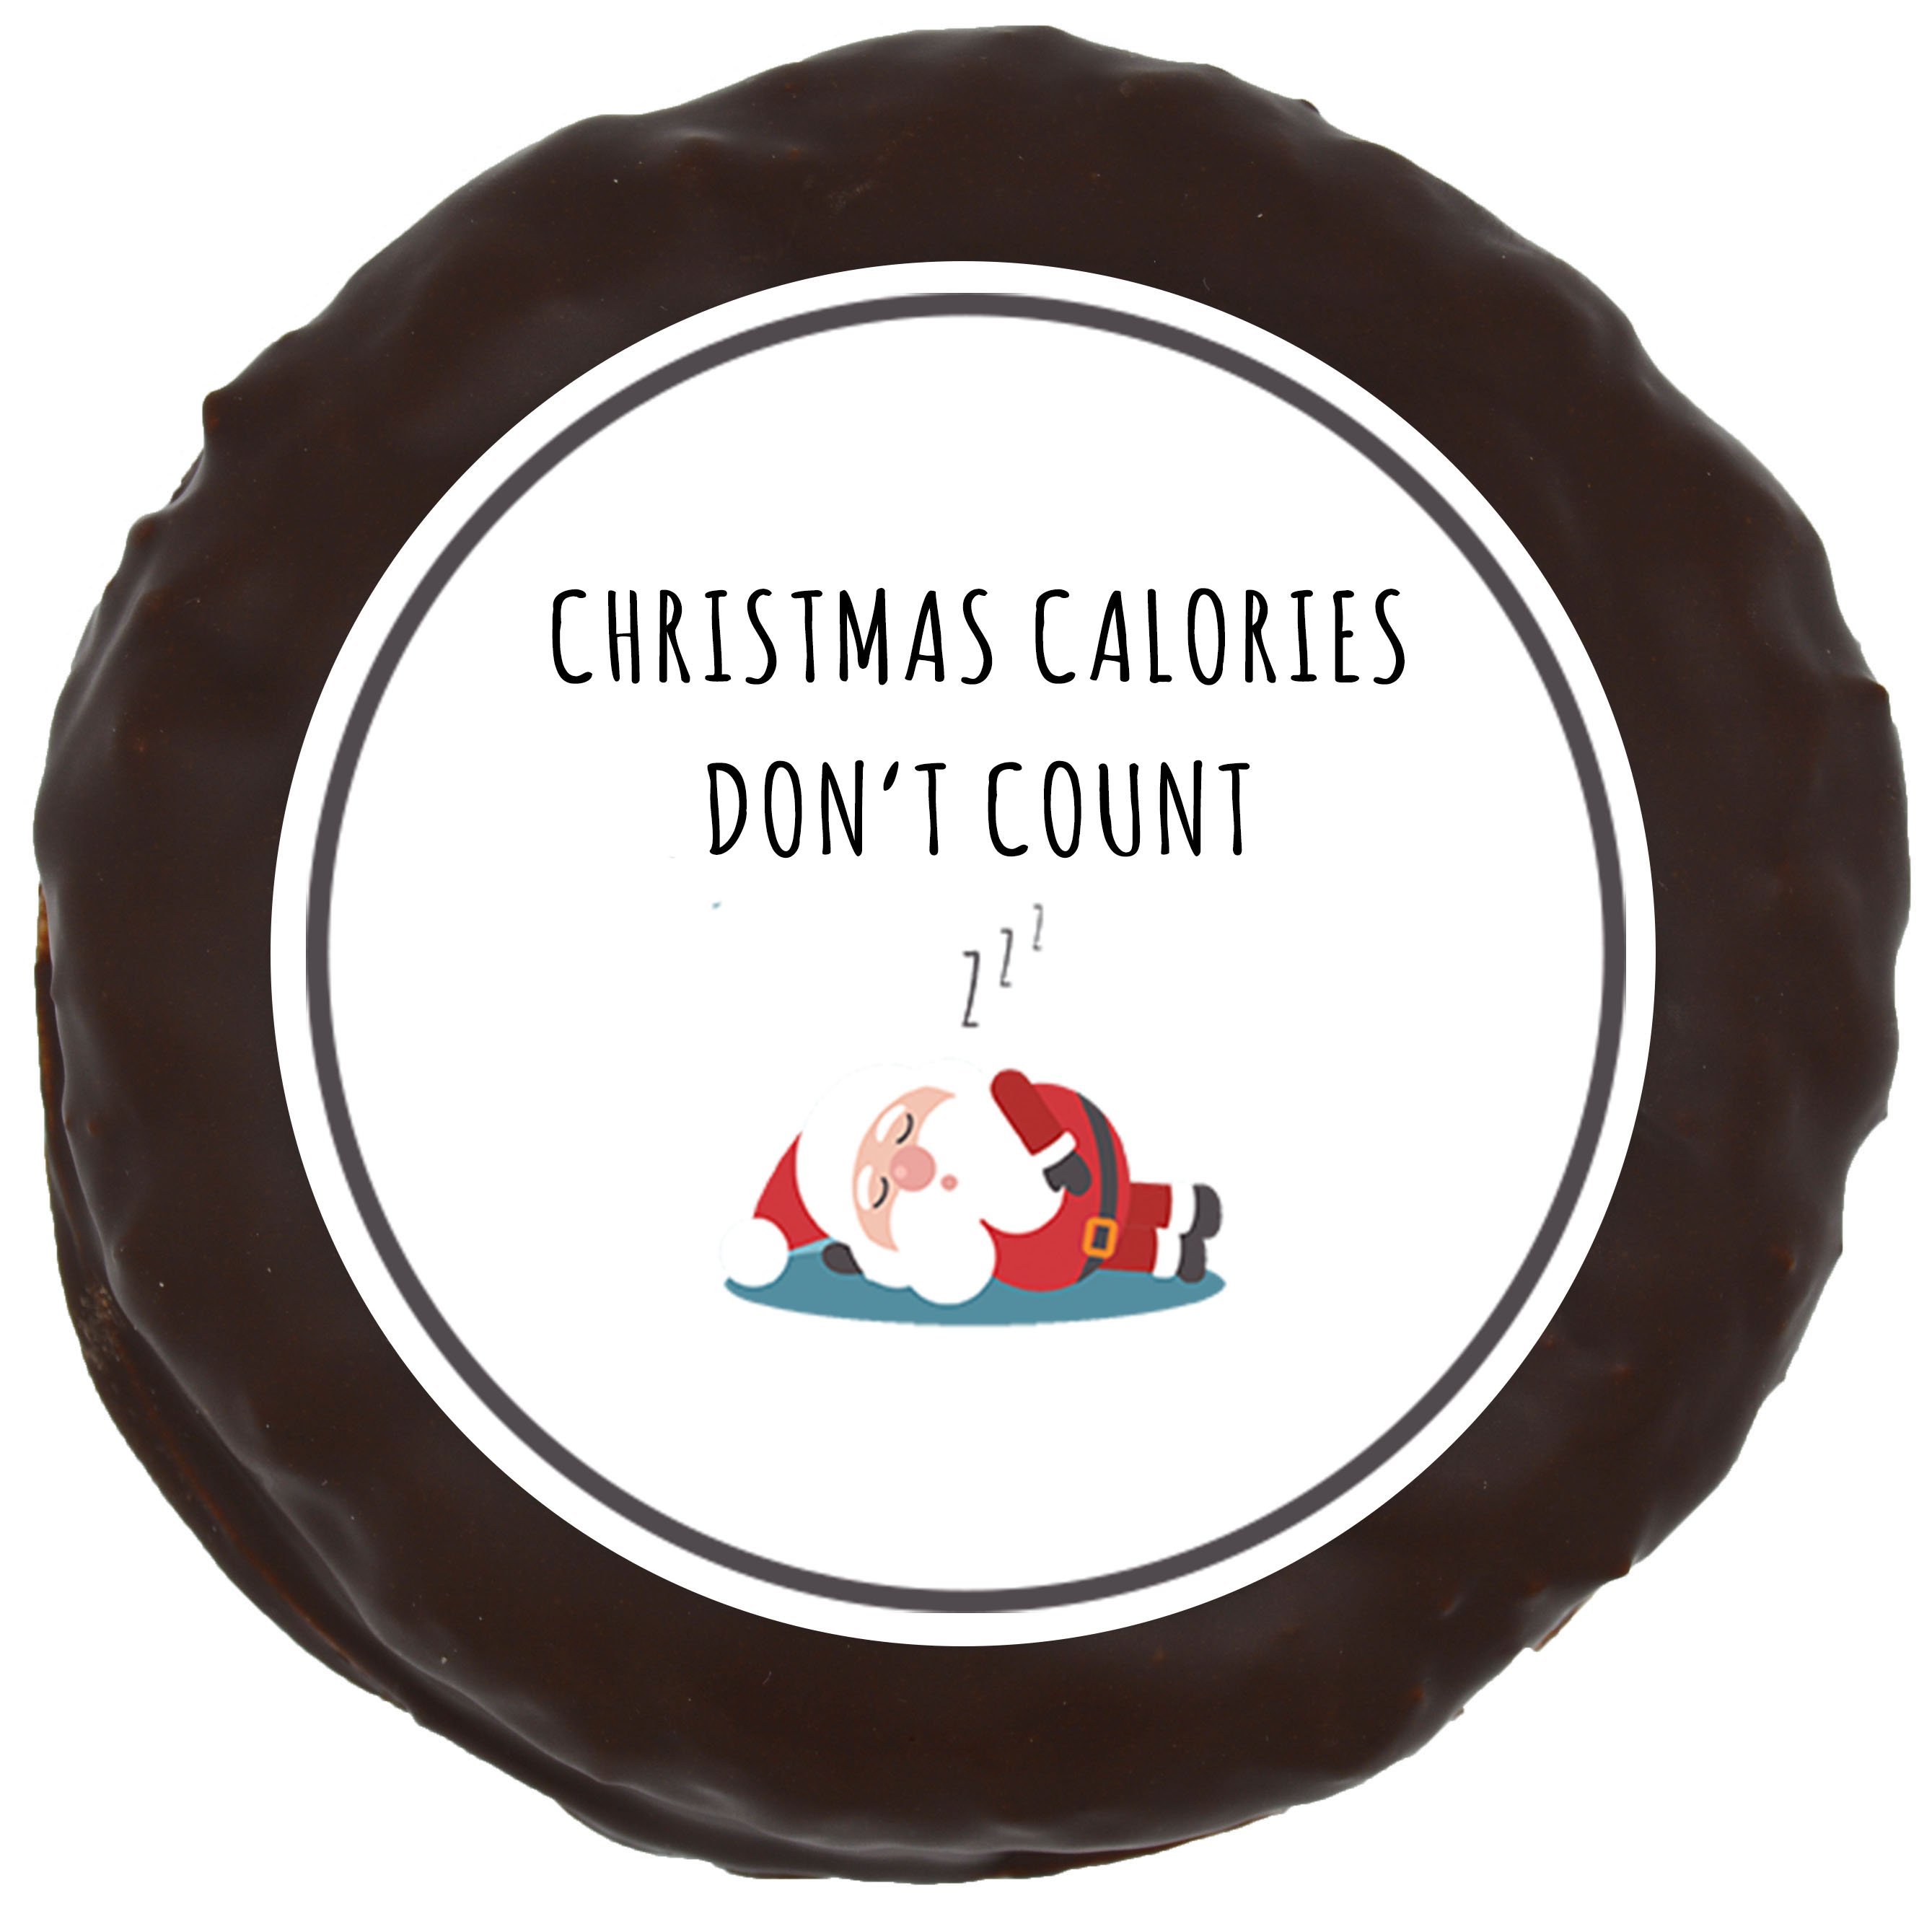 "Christmas calories" Lebkuchen